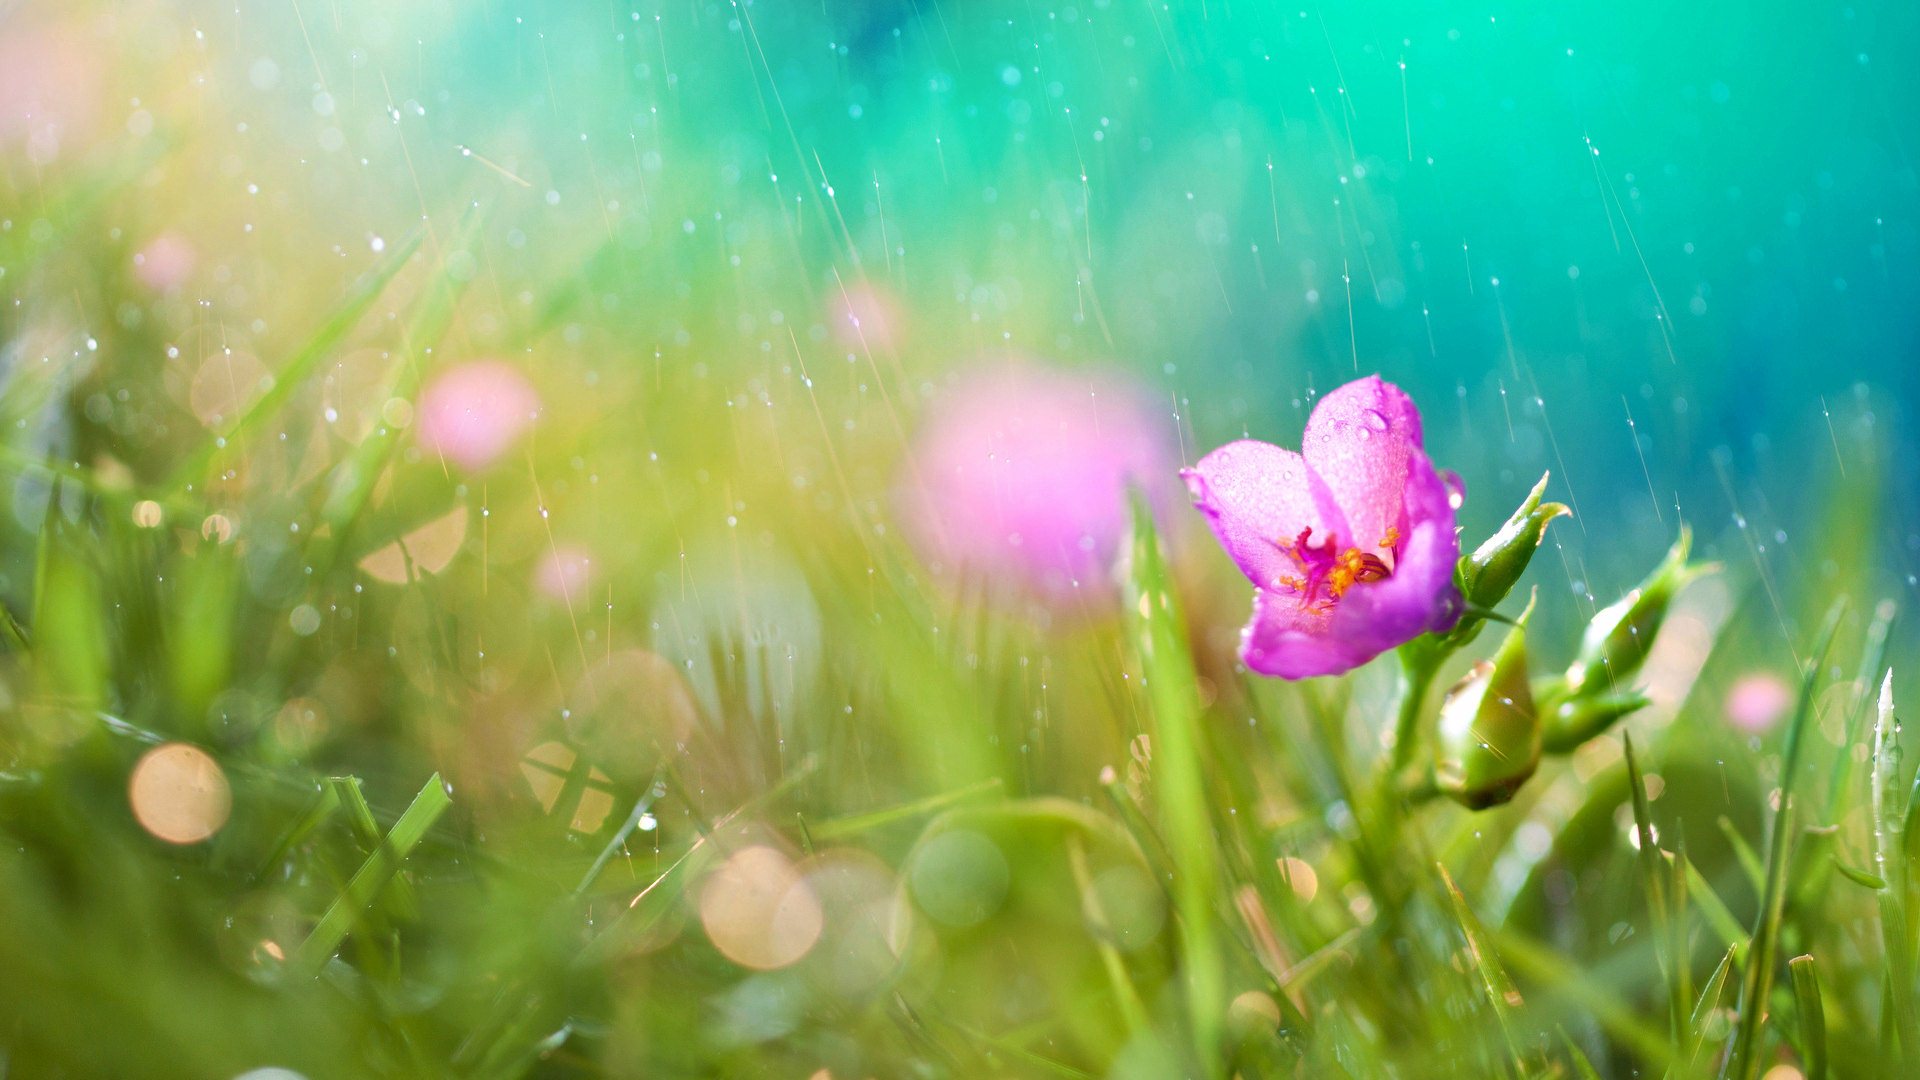 Flower-in-Rain-Wallpaper.jpg